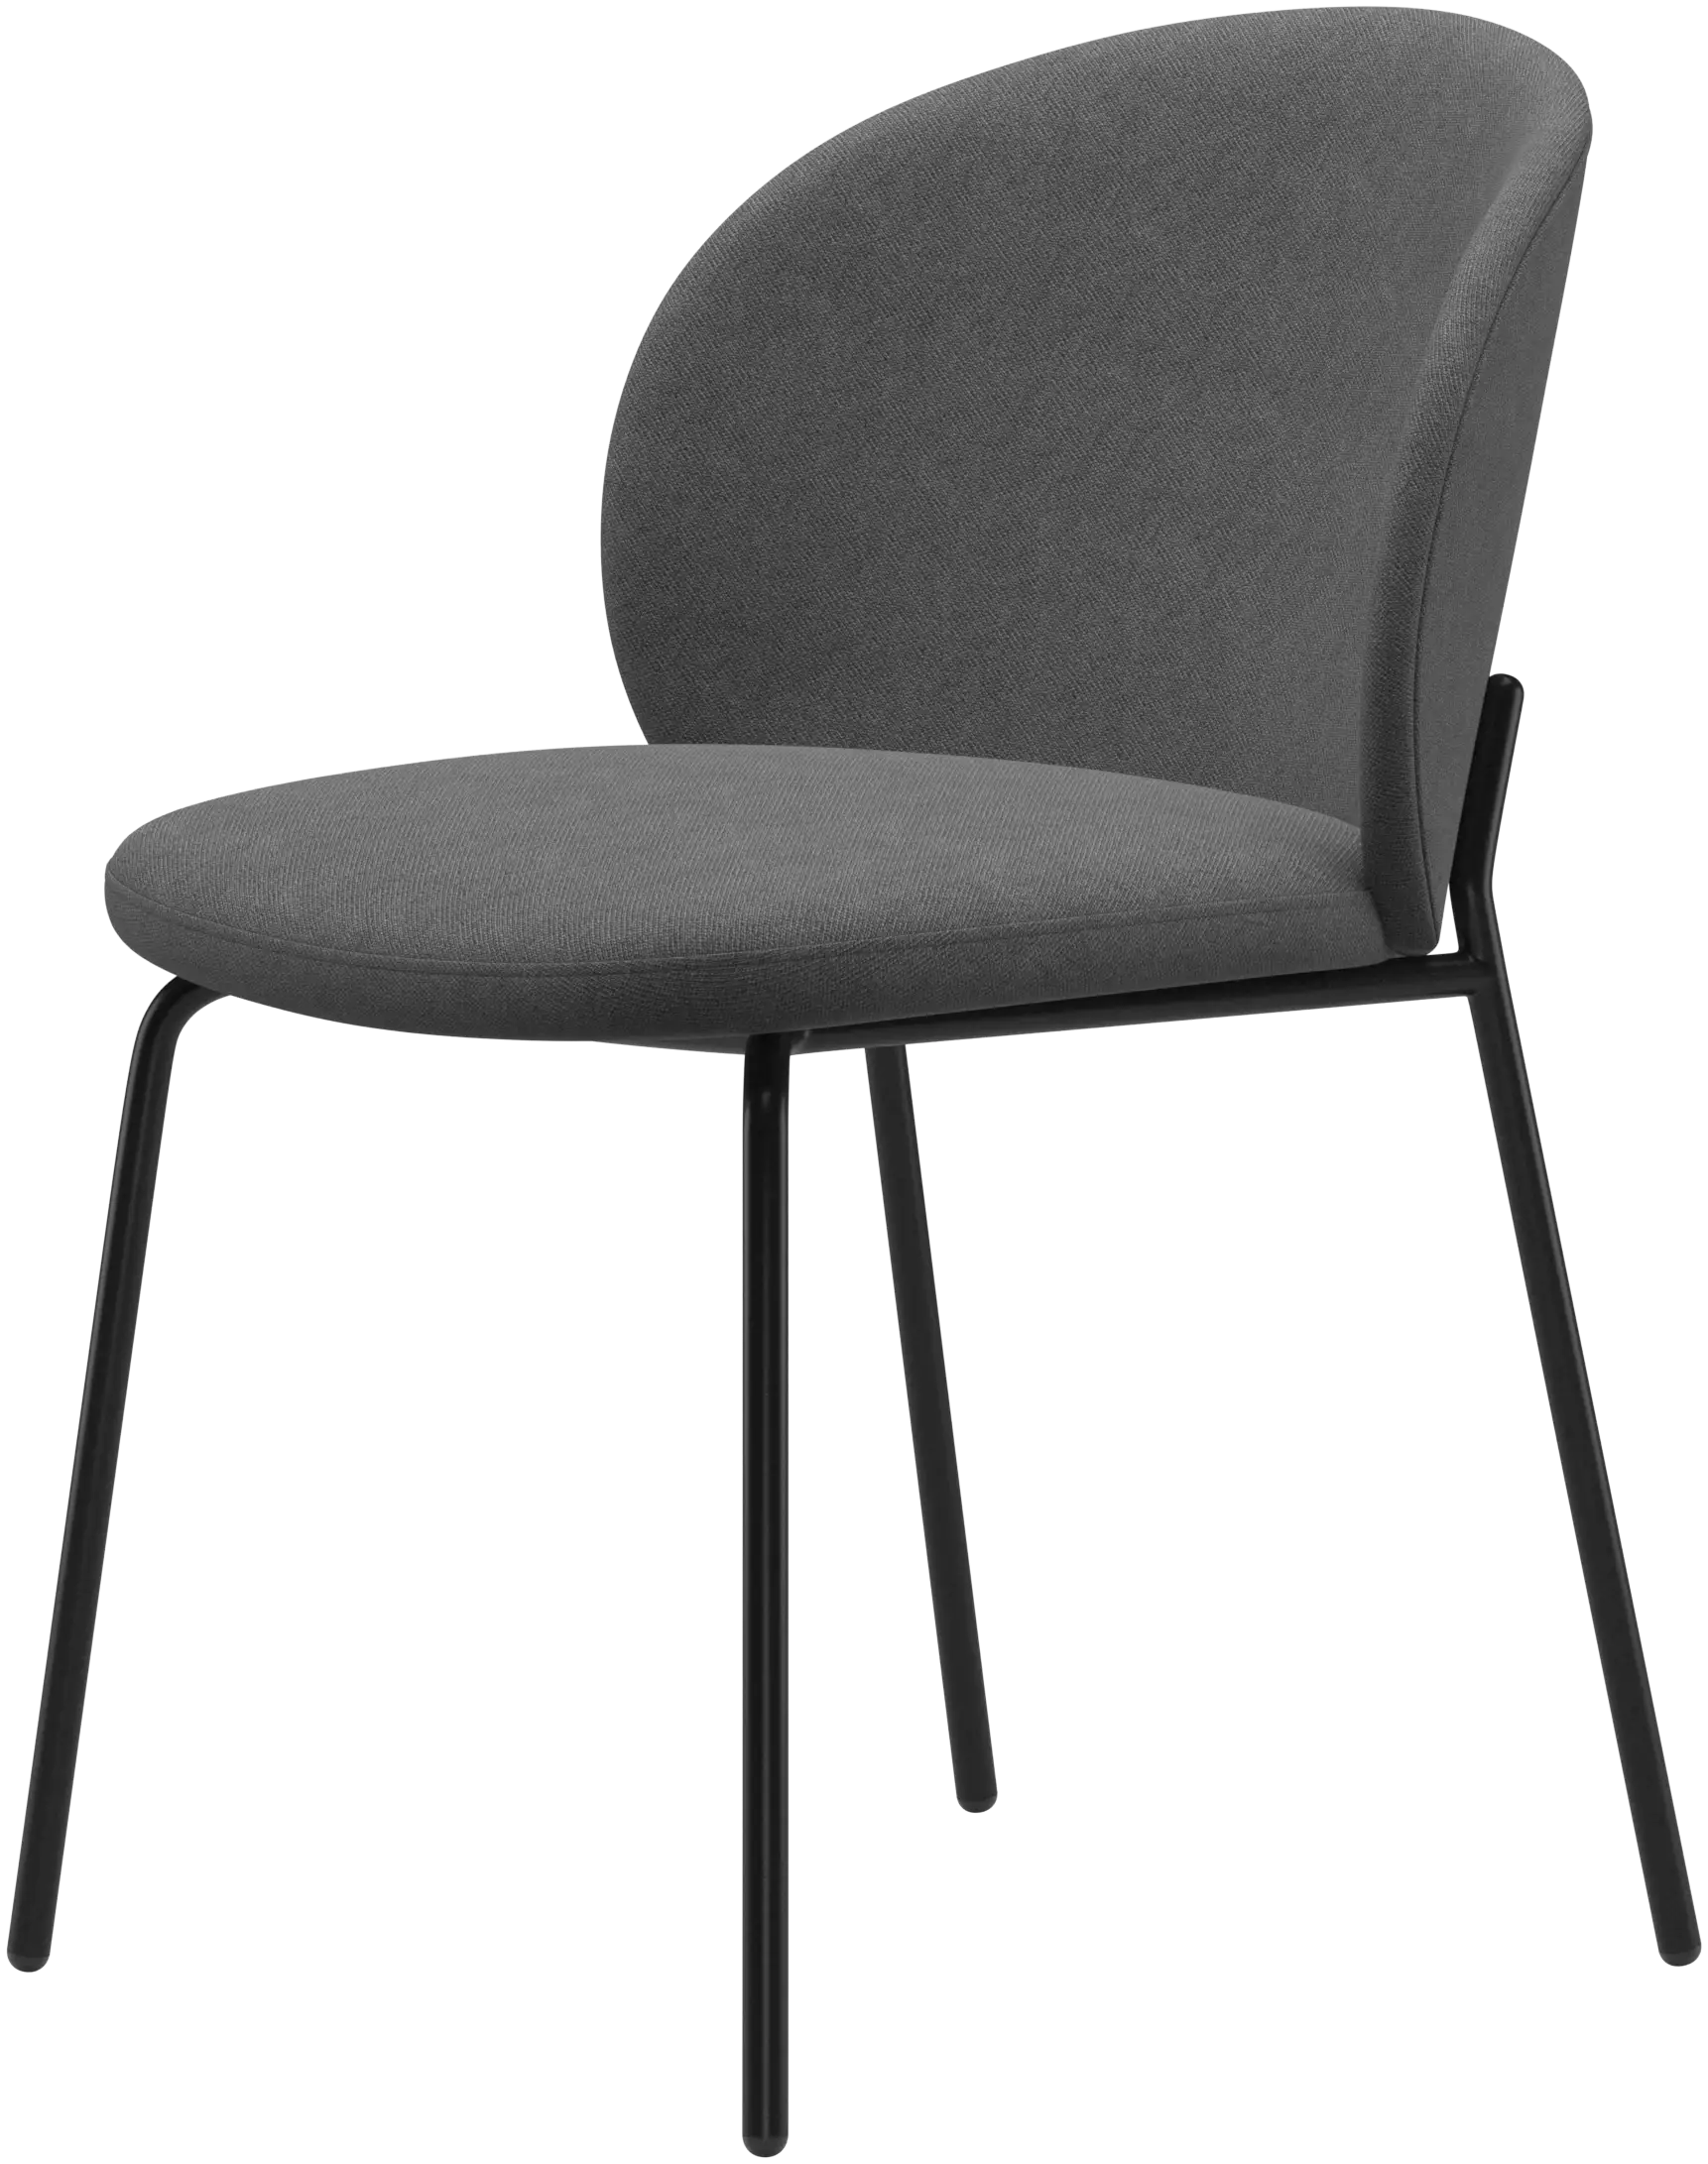 Princeton chair